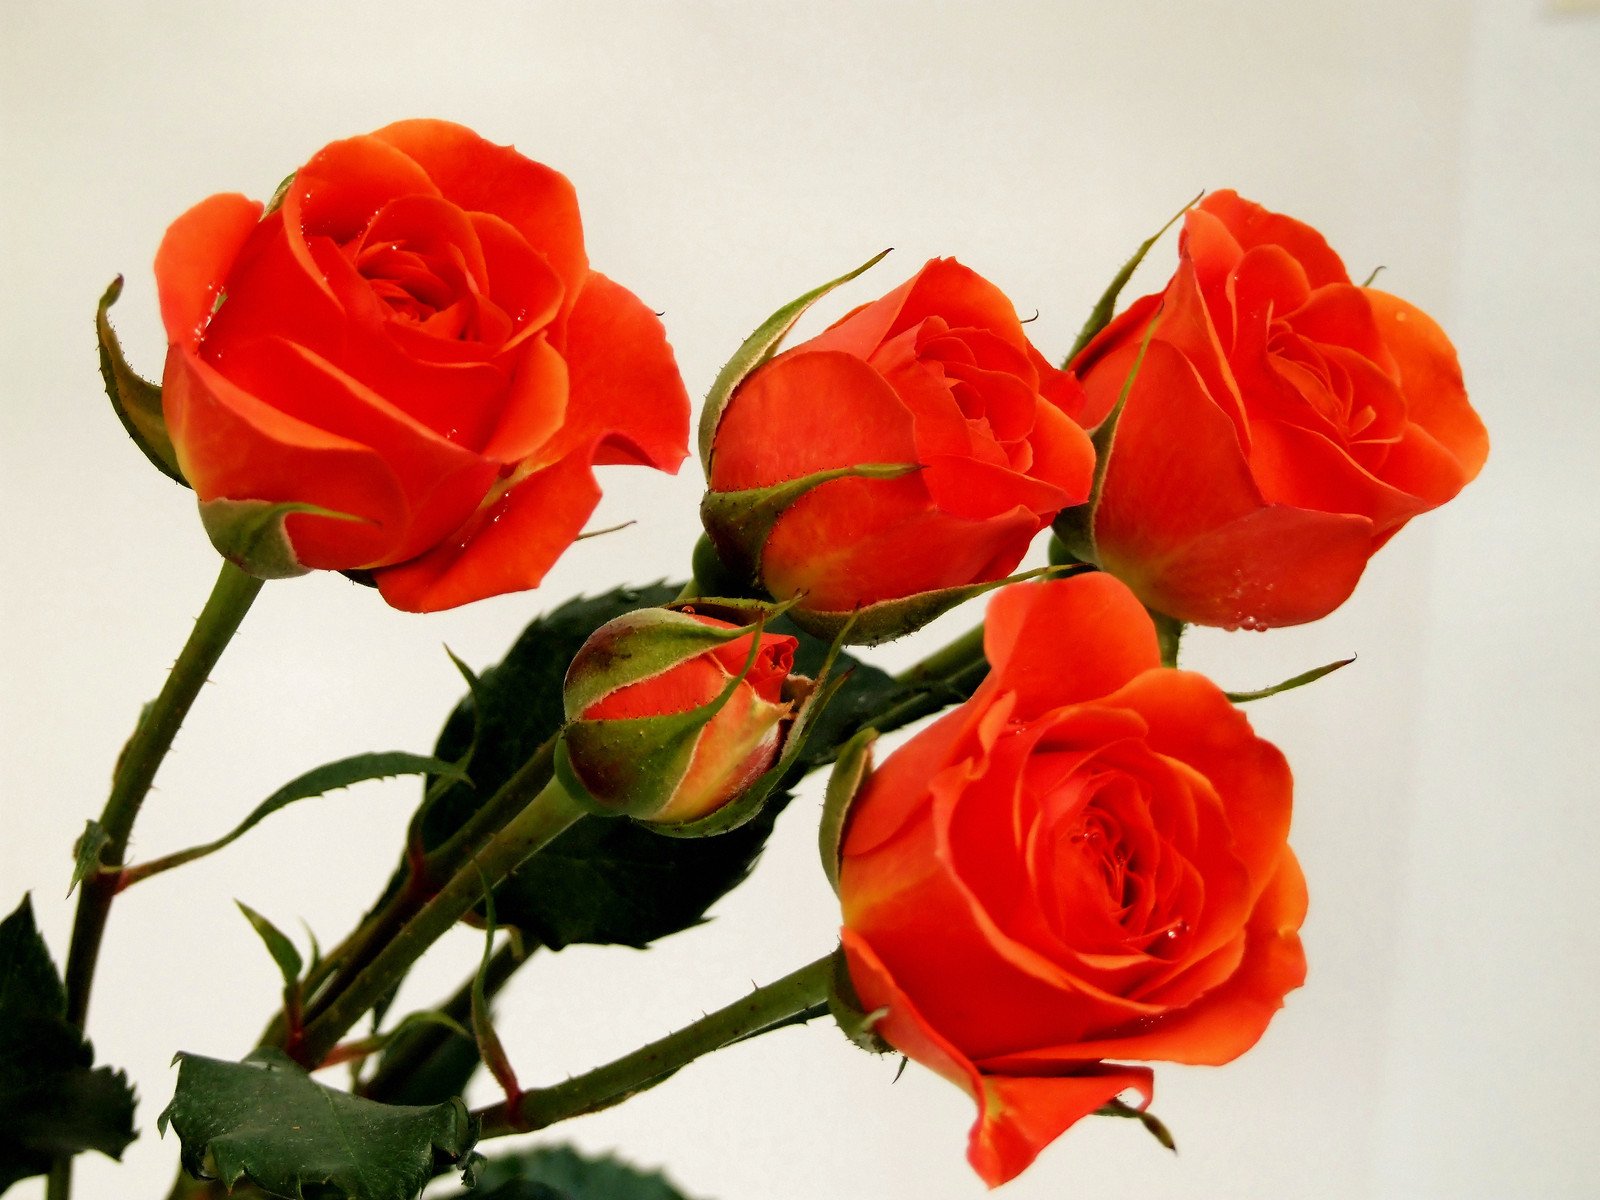 three orange roses are displayed in a white vase